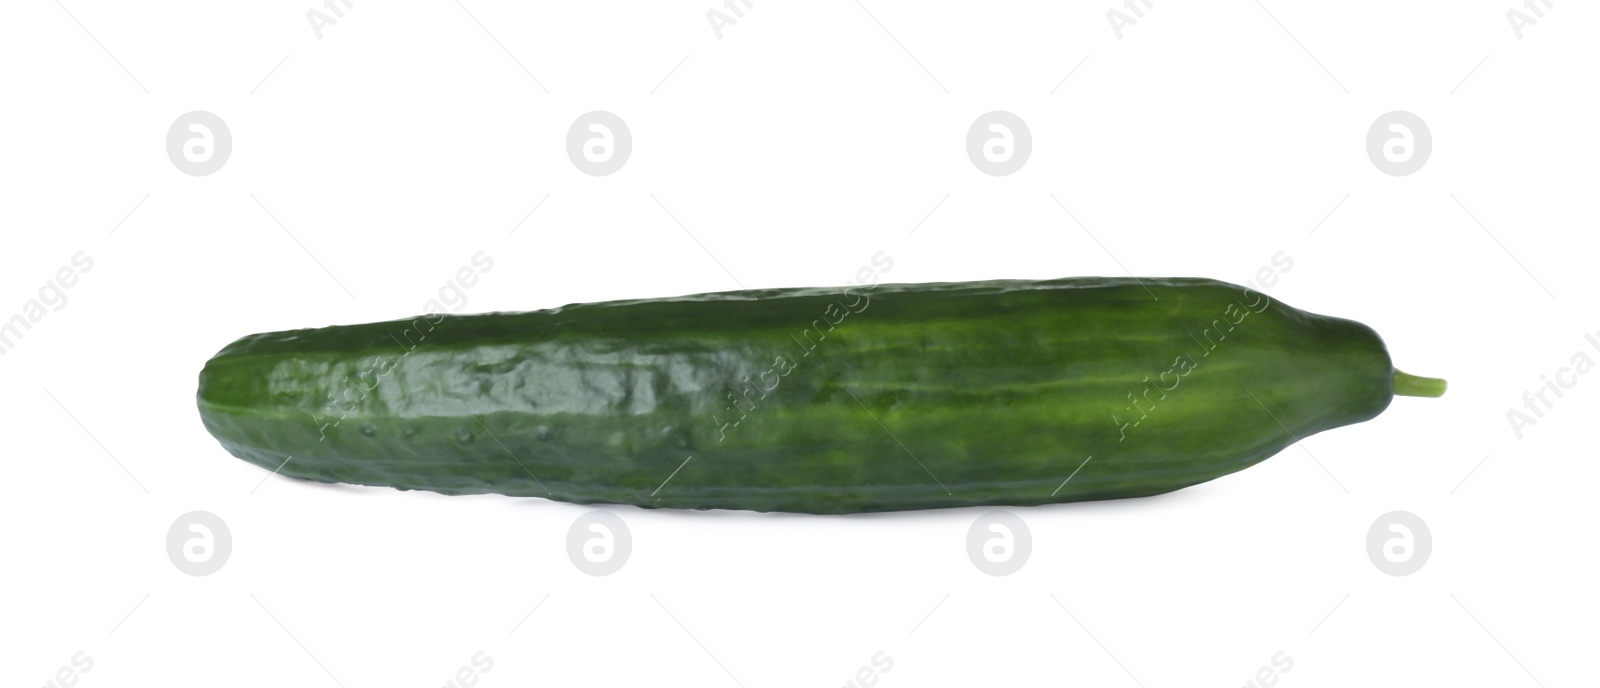 Photo of Whole fresh green cucumber isolated on white